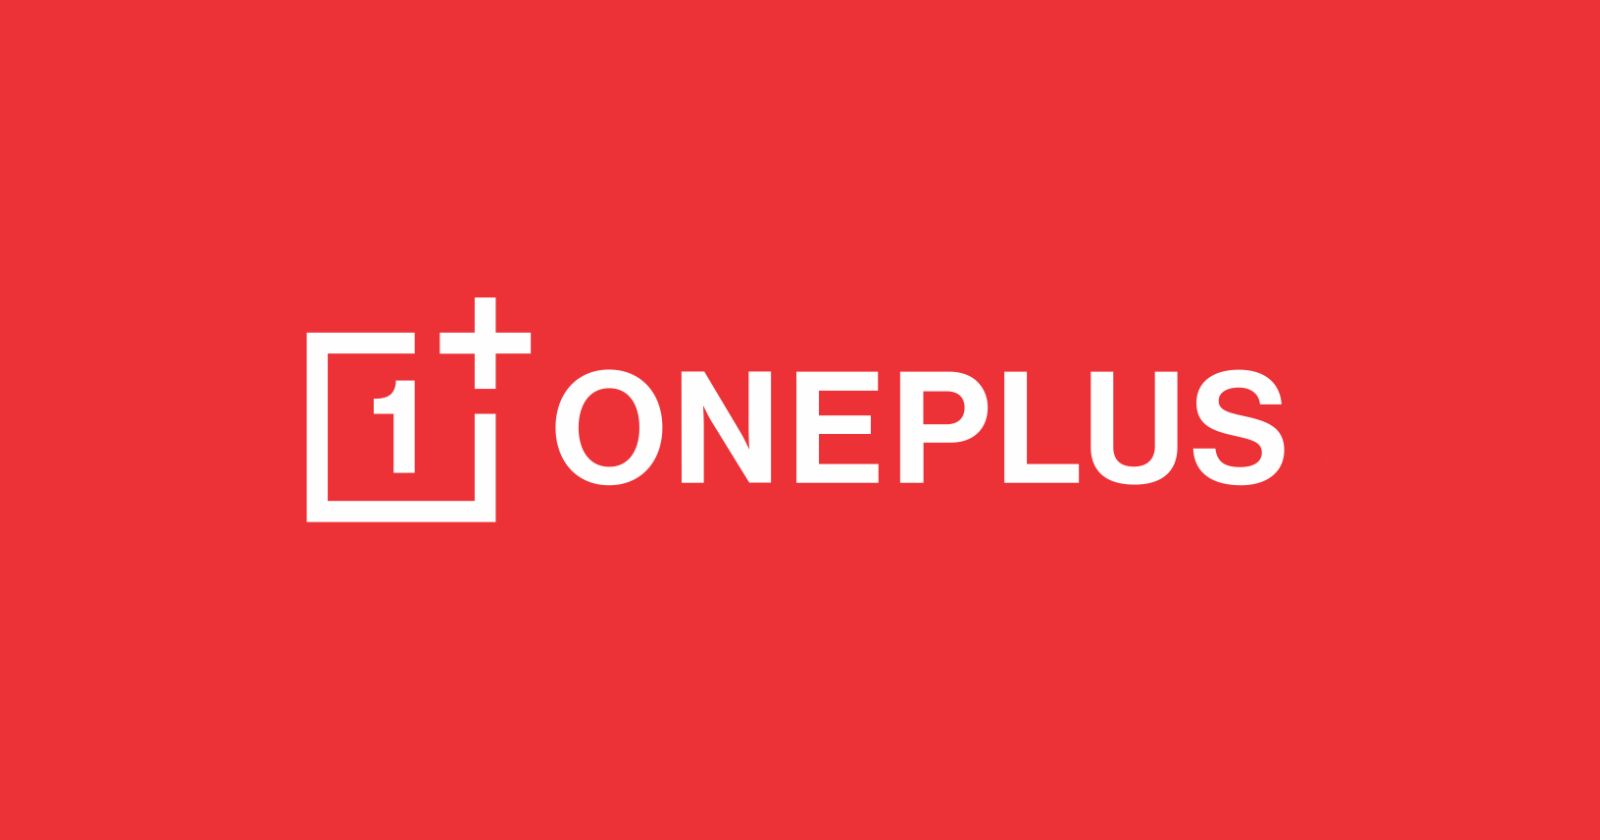 oneplus red bg logo featured 030523